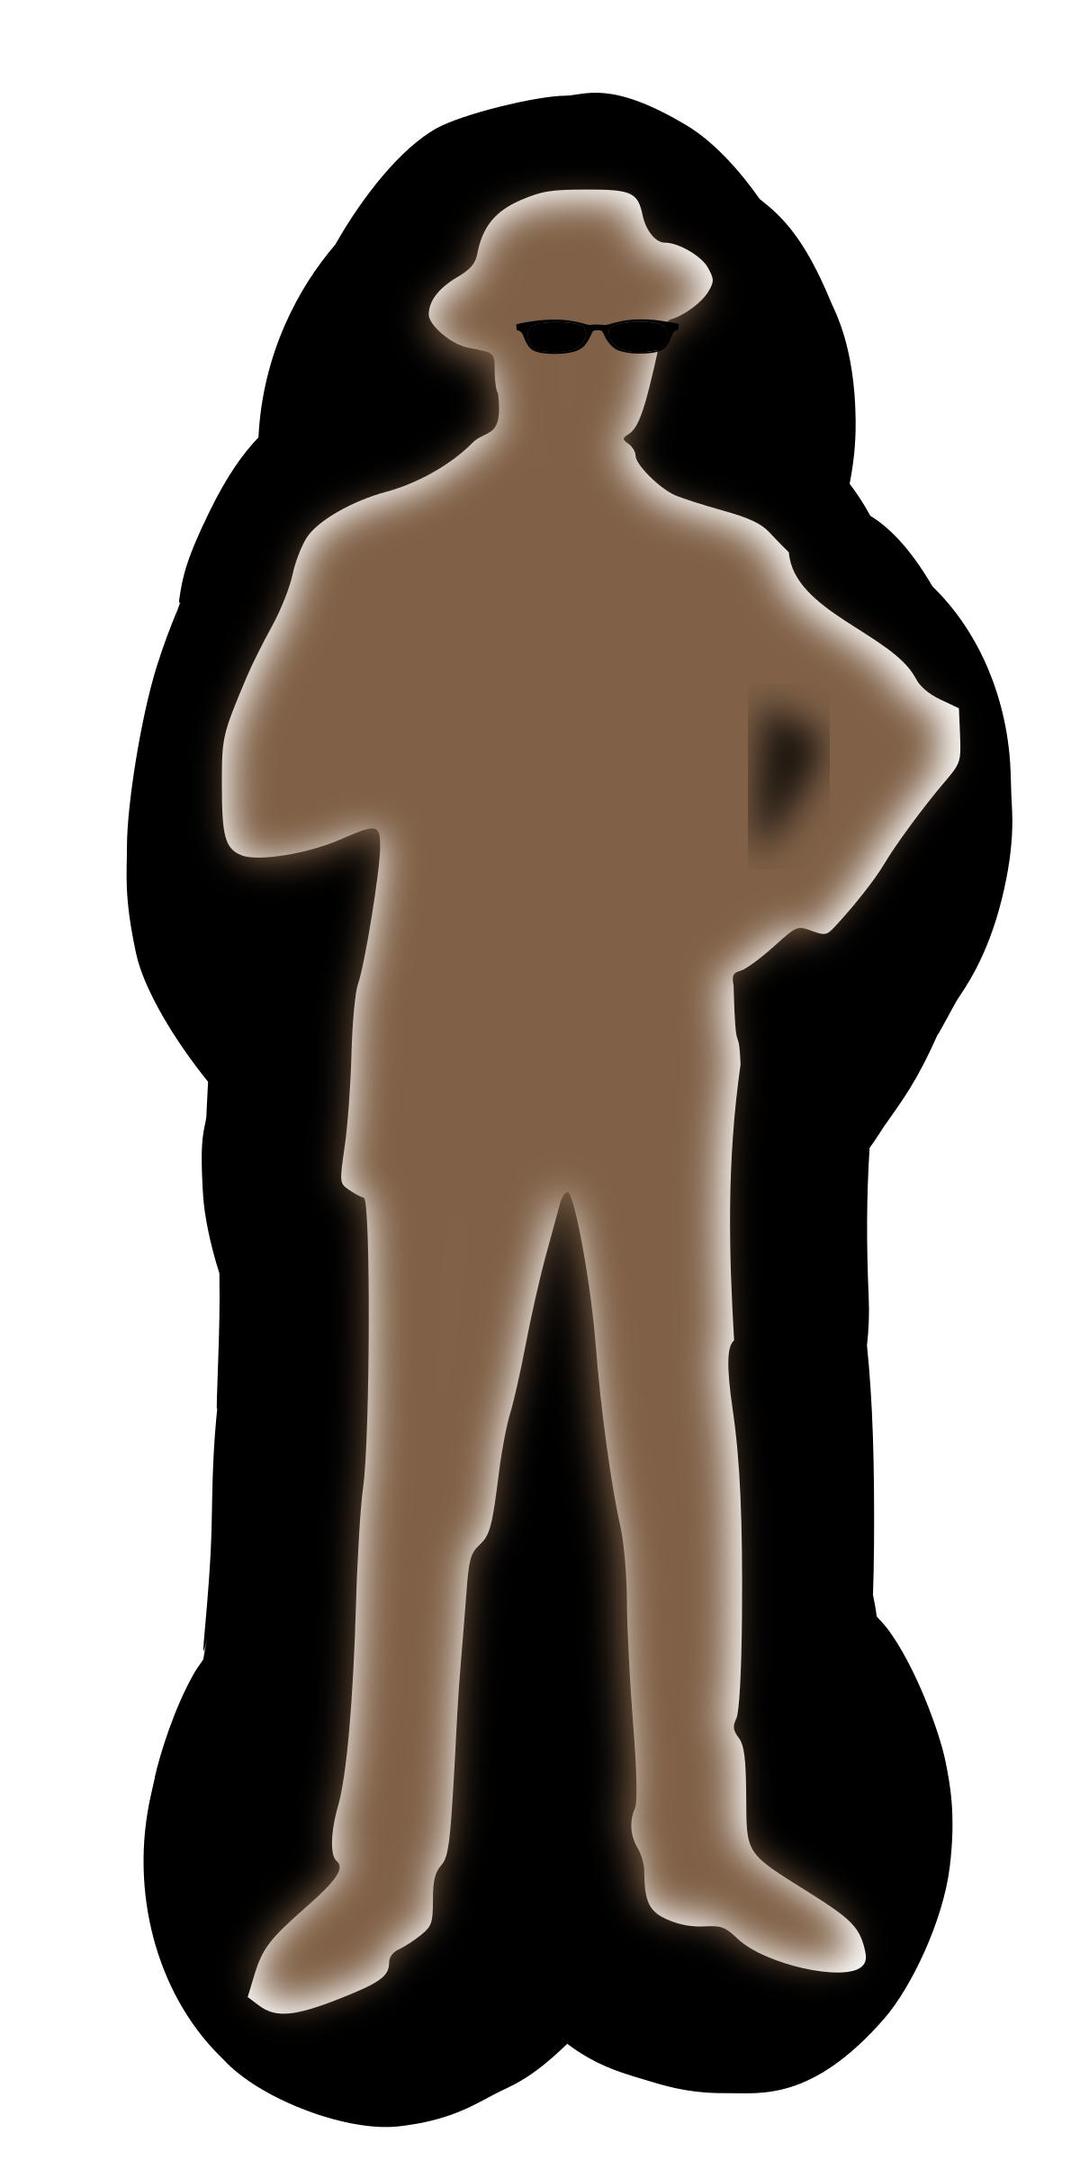 Man-silhouette 01 png transparent